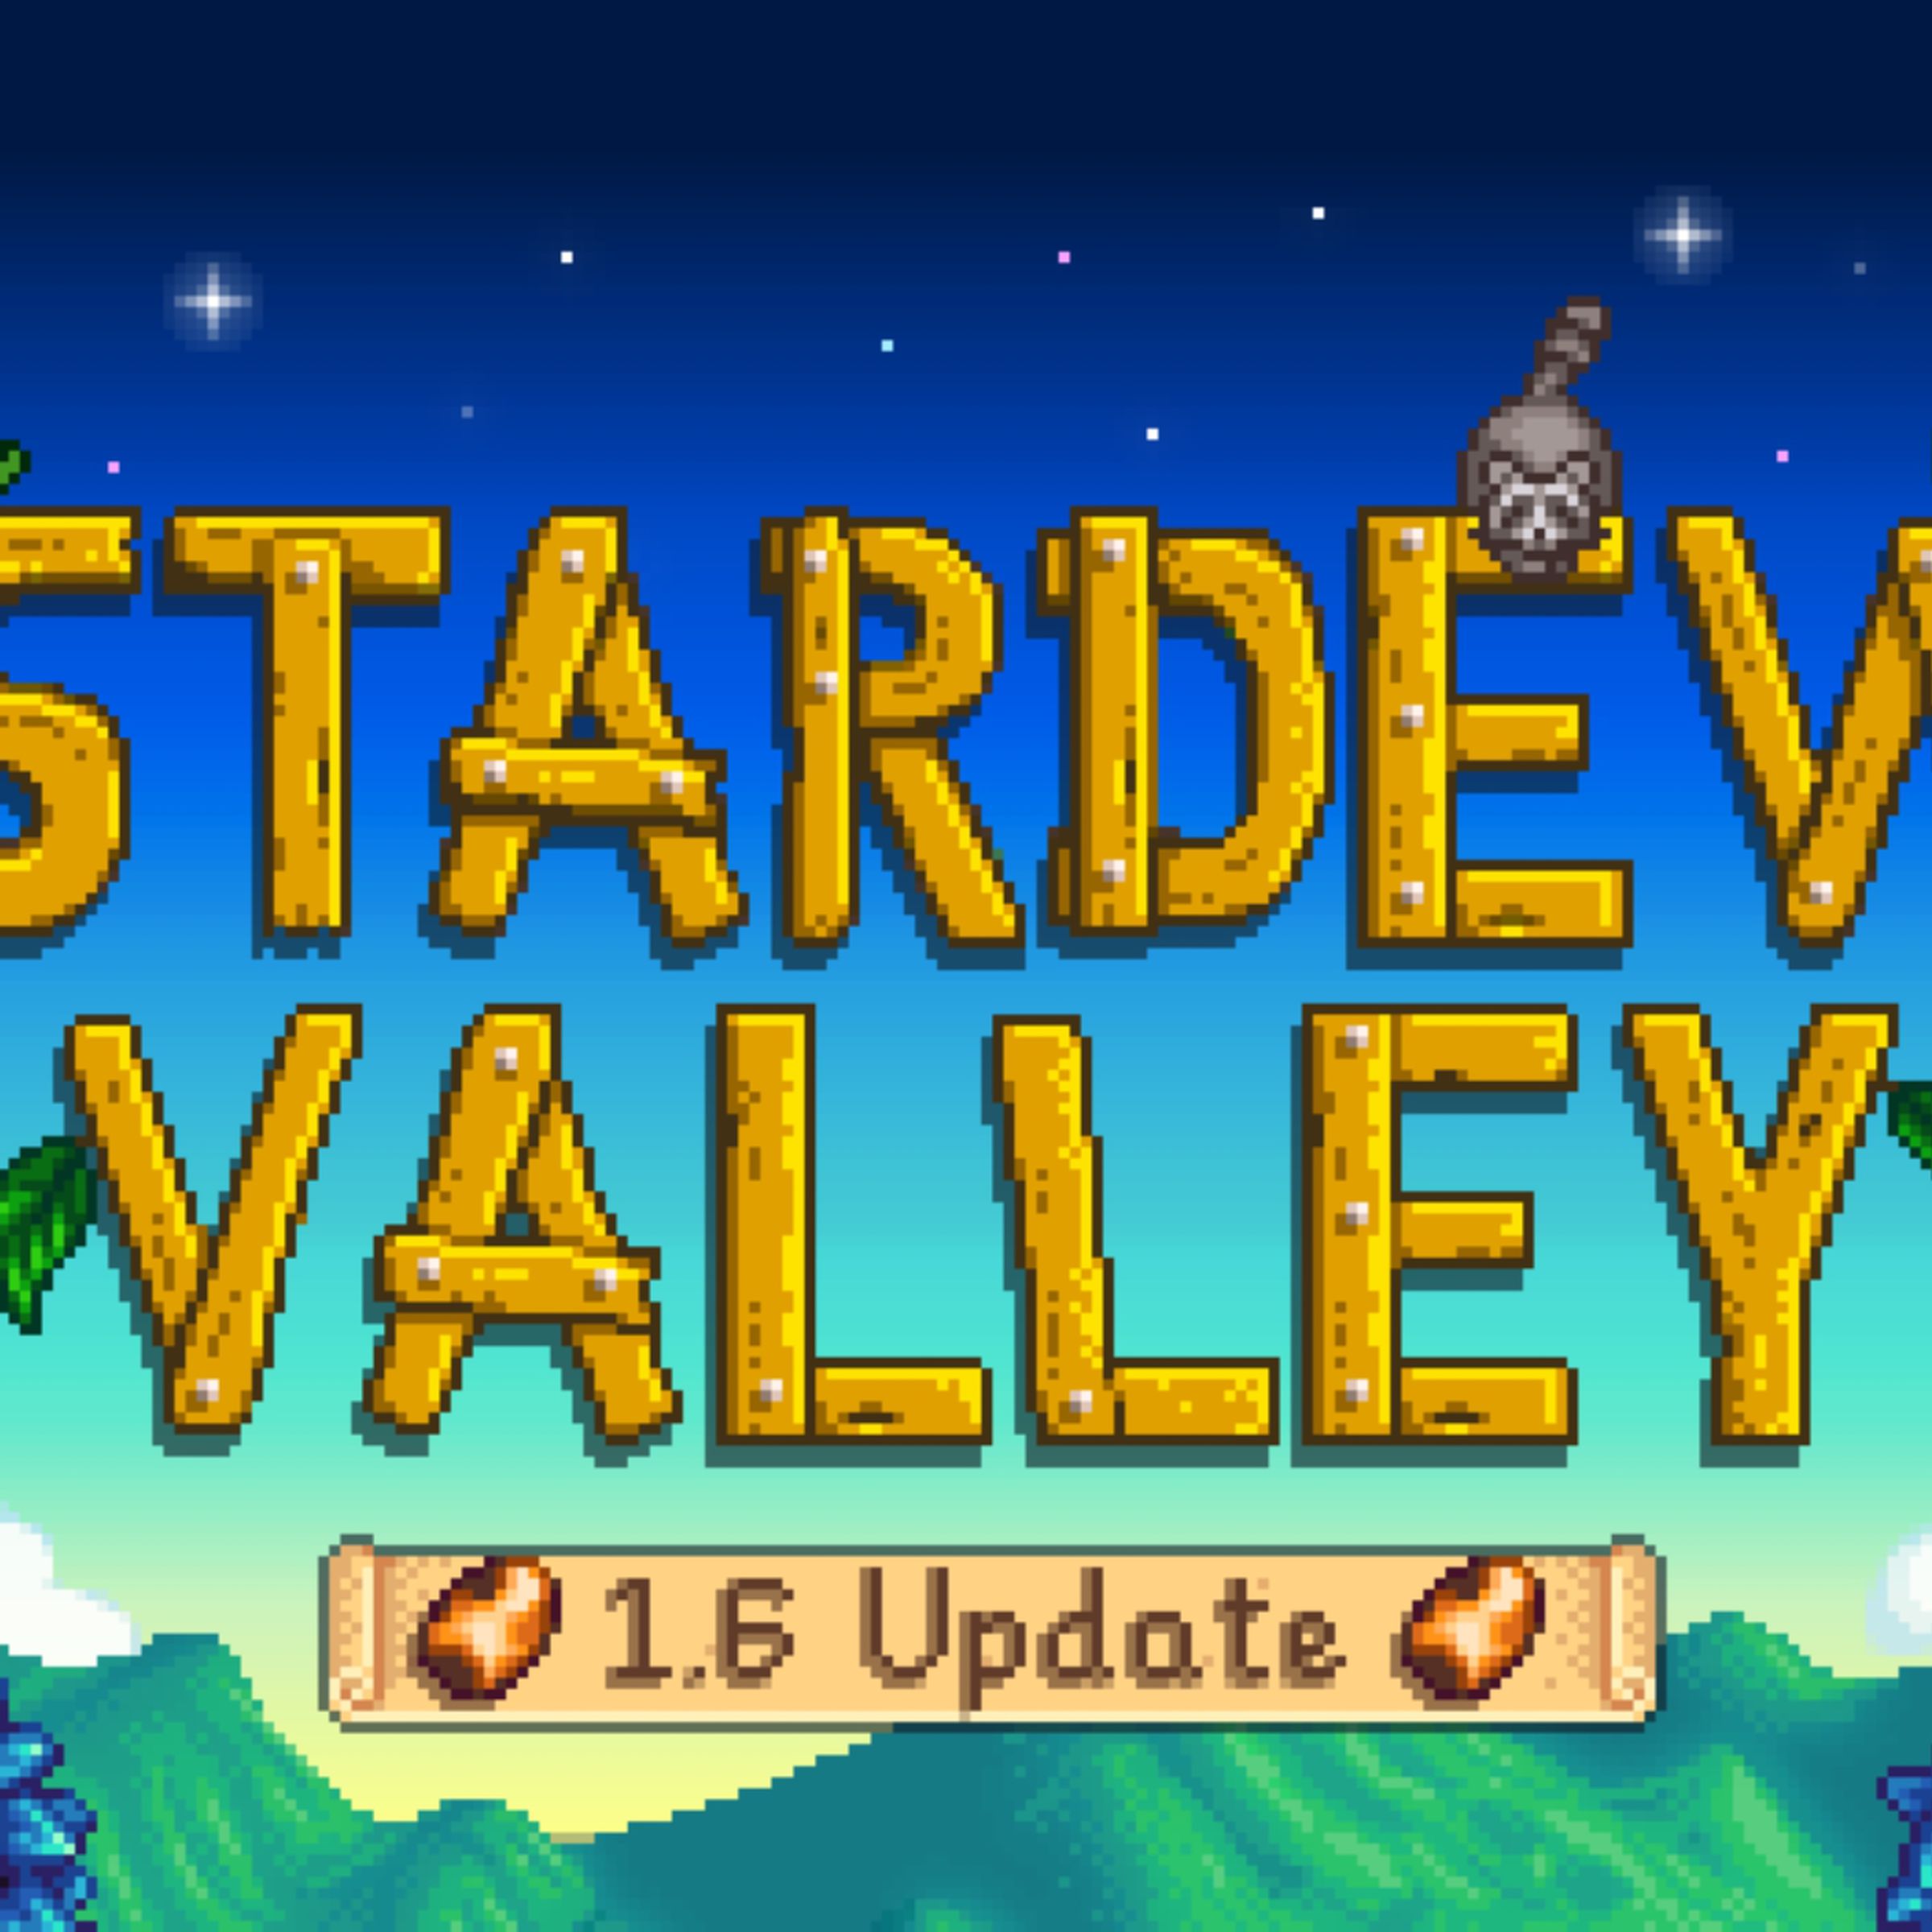 A pixel art banner for Stardew Valley’s 1.6 update.